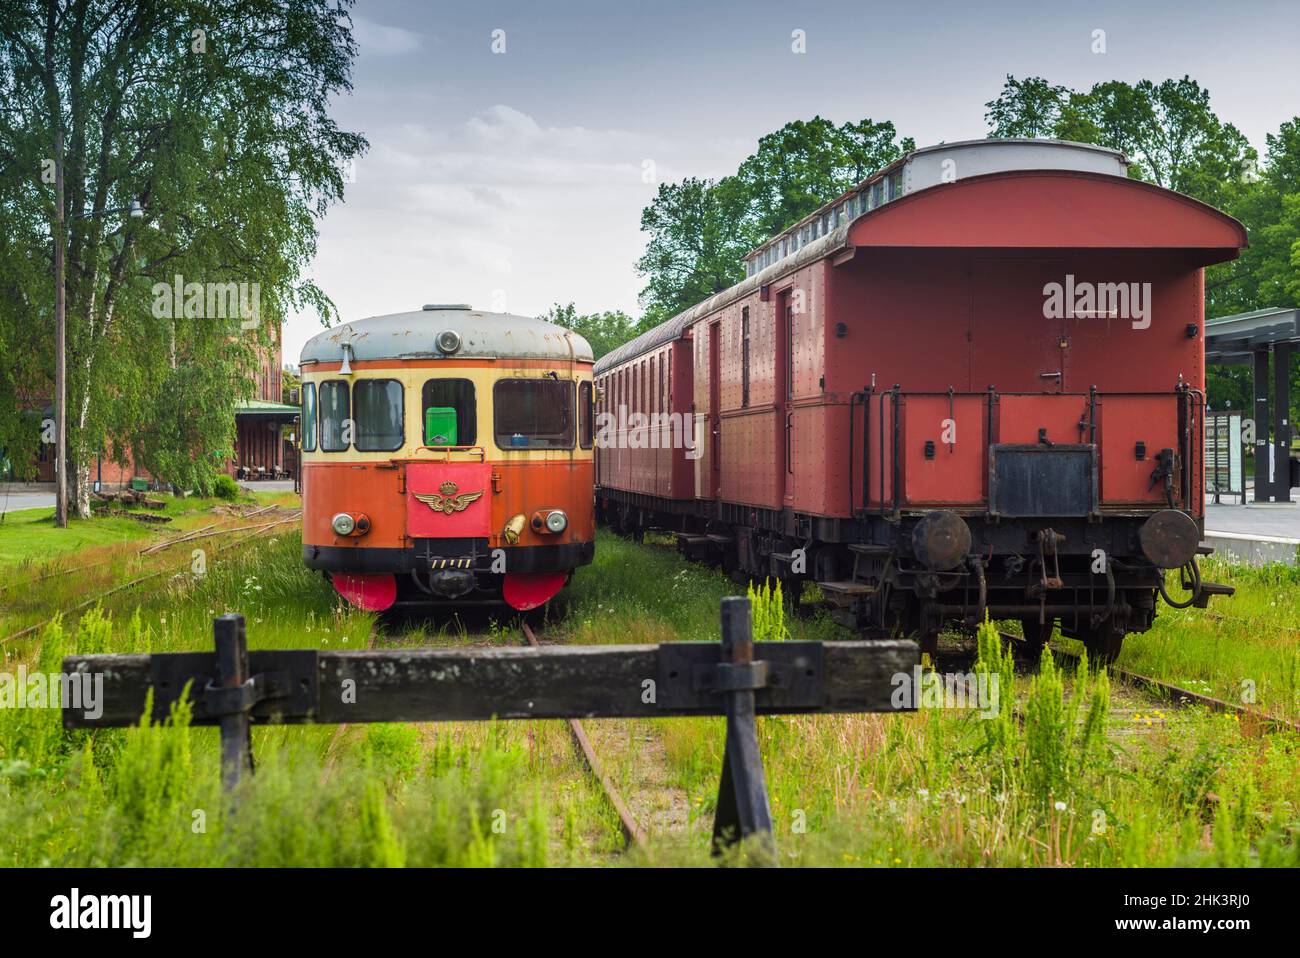 Sweden, Vastmanland, Nora, antique train wagons Stock Photo